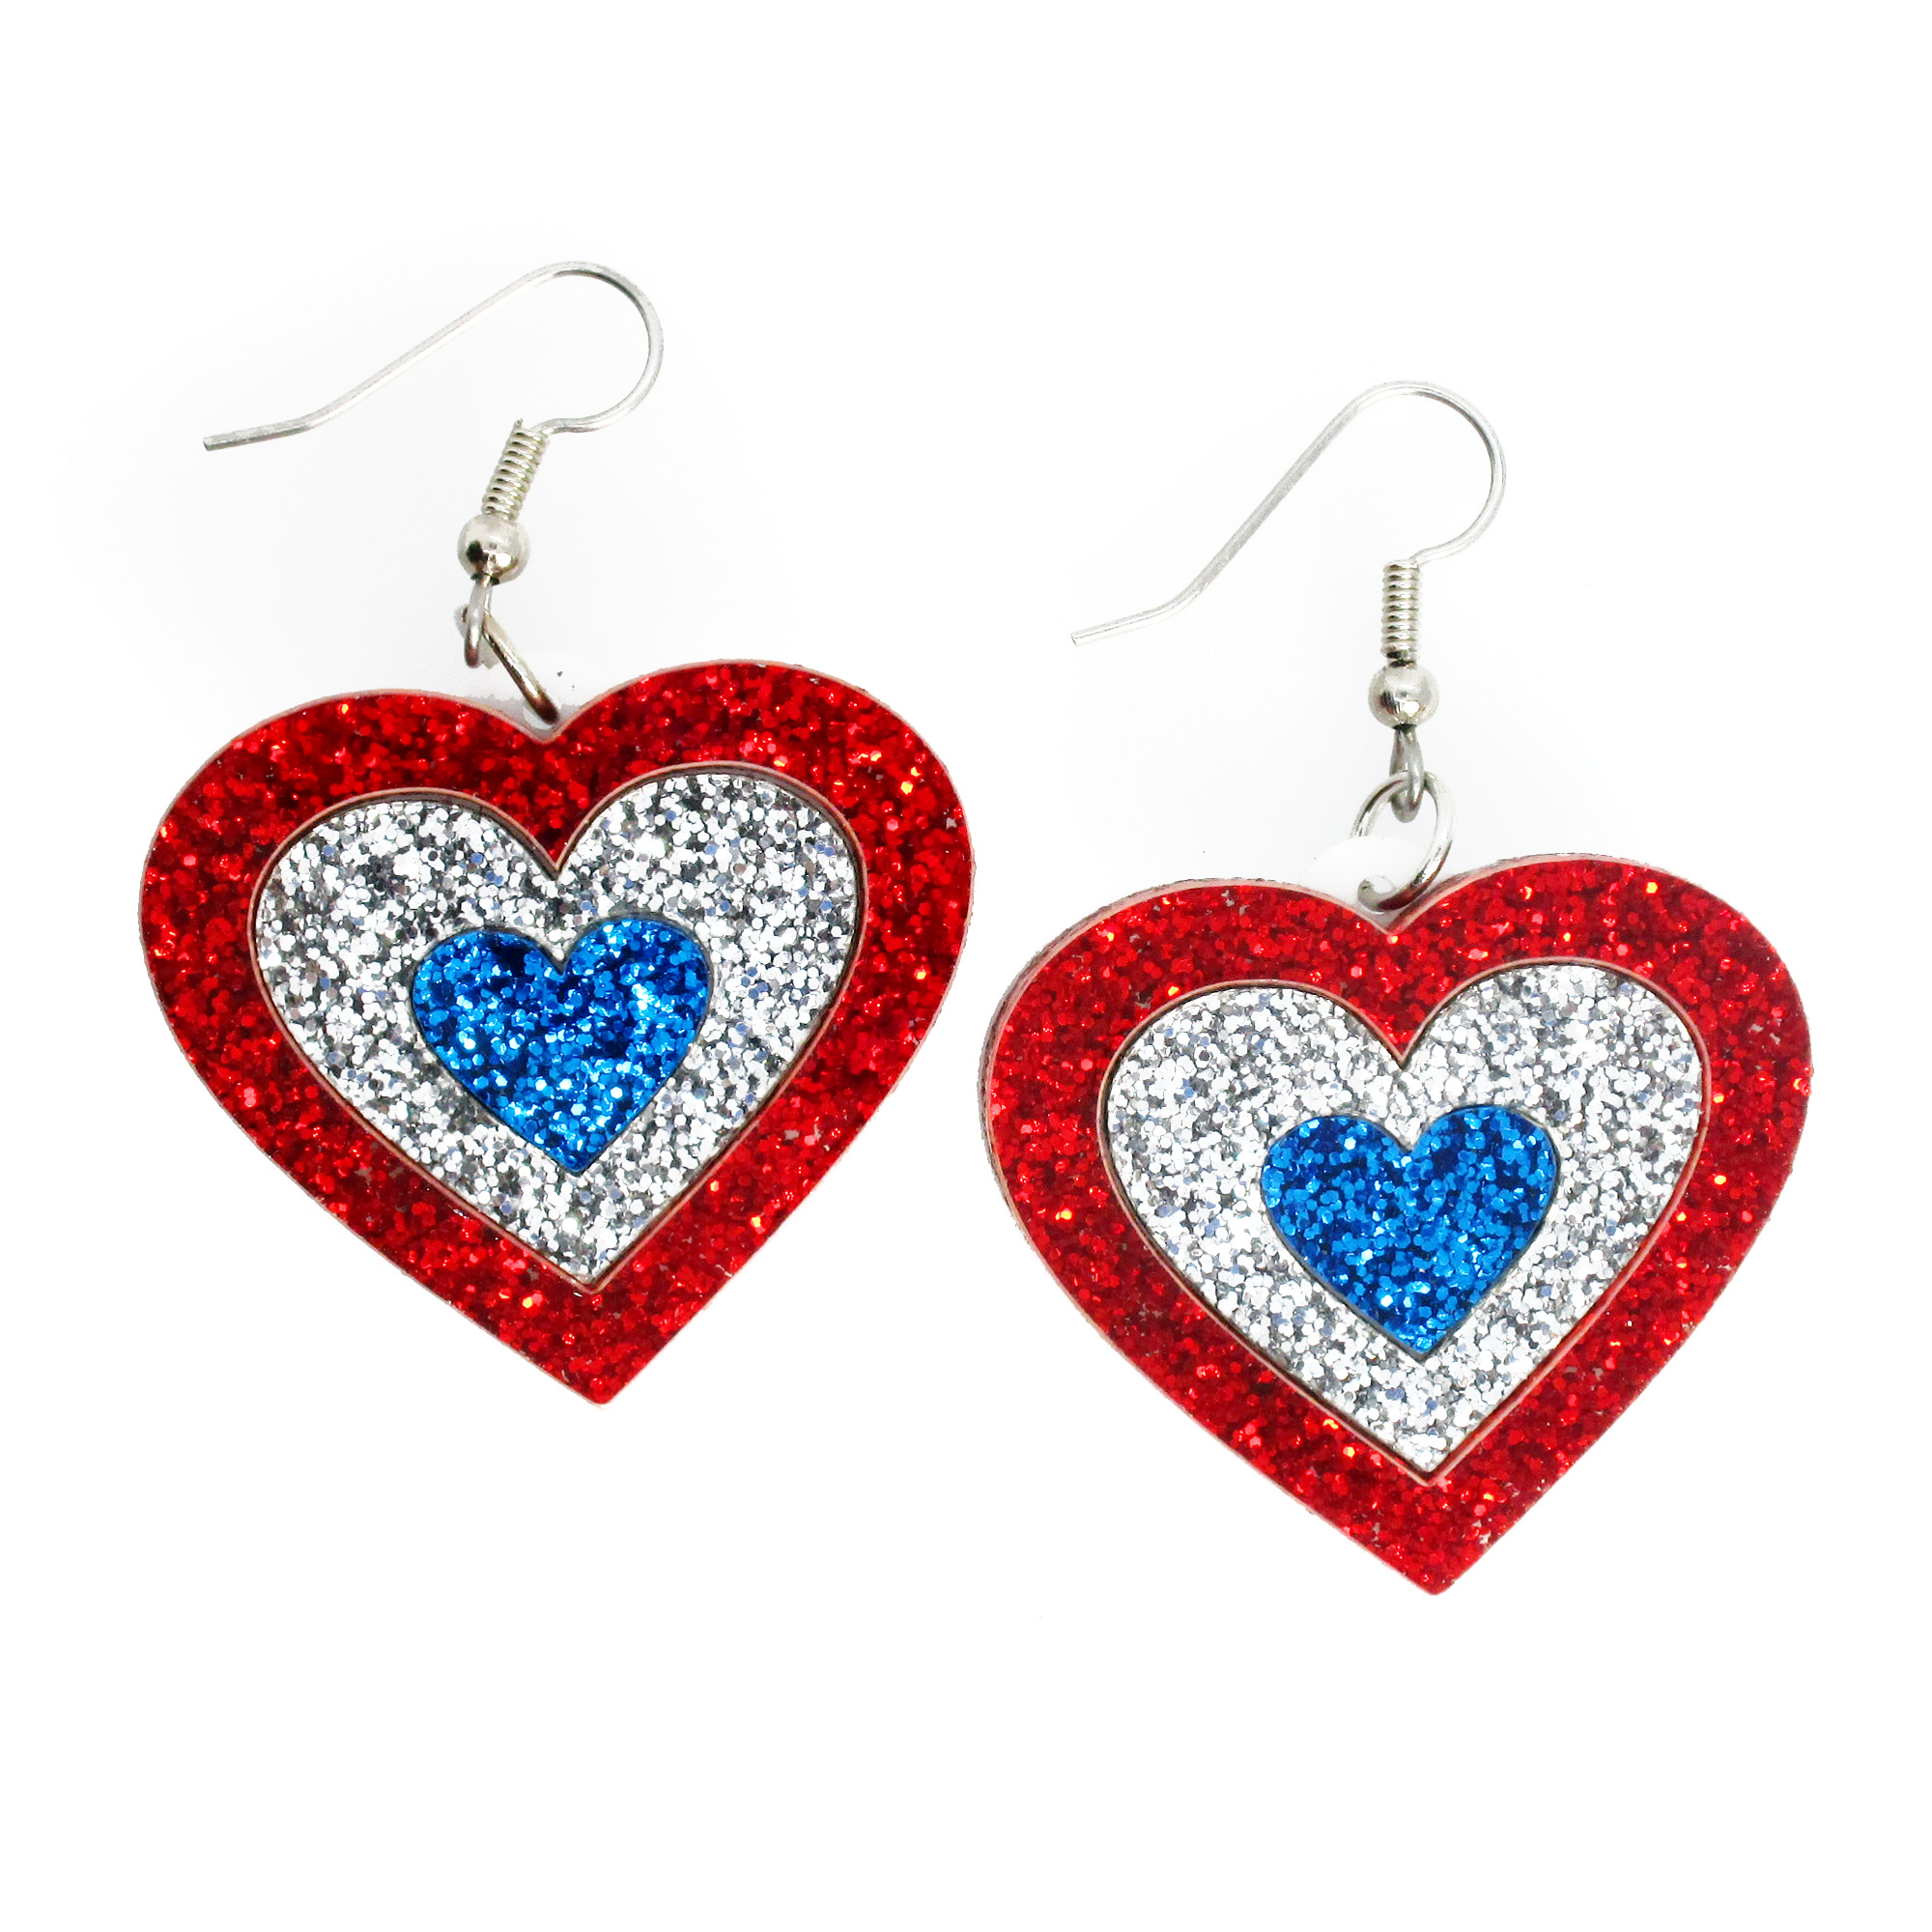 red white blue heart enamel earrings flag heart earrings small patriotic Stars and Stripes charm earrings U.S gold heart flags